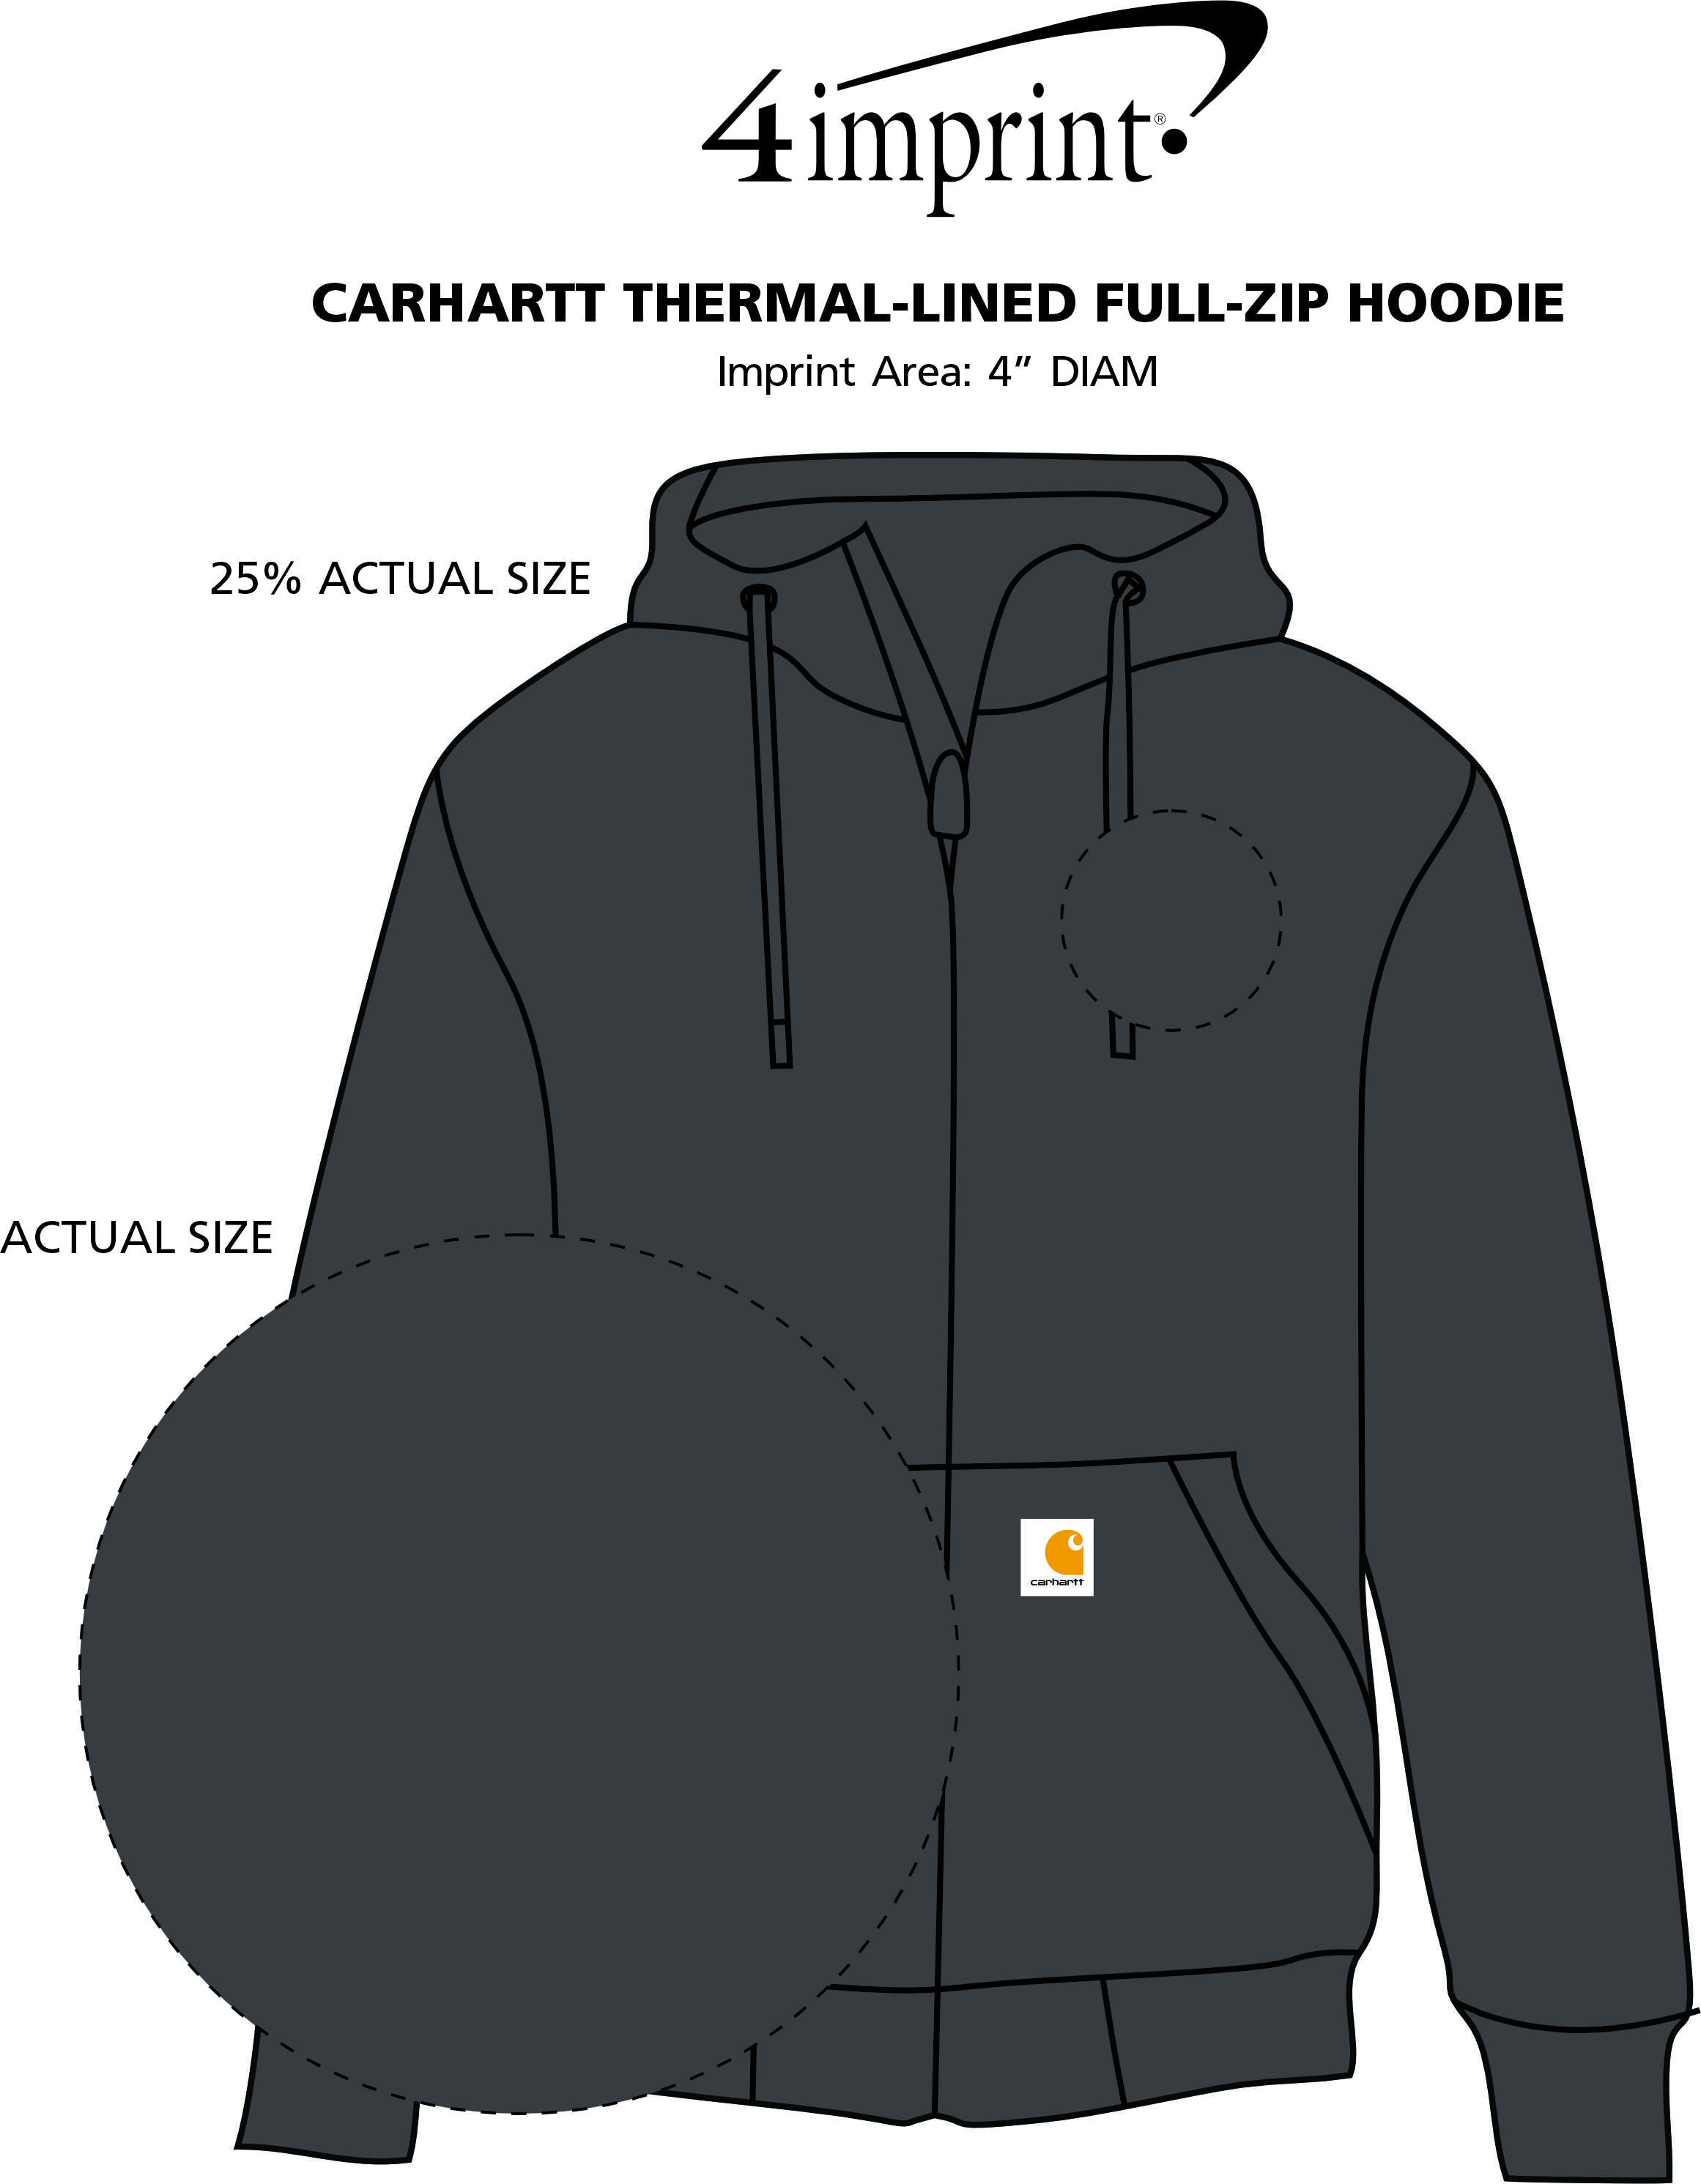 Imprint Area of Carhartt Thermal-Lined Full-Zip Hoodie